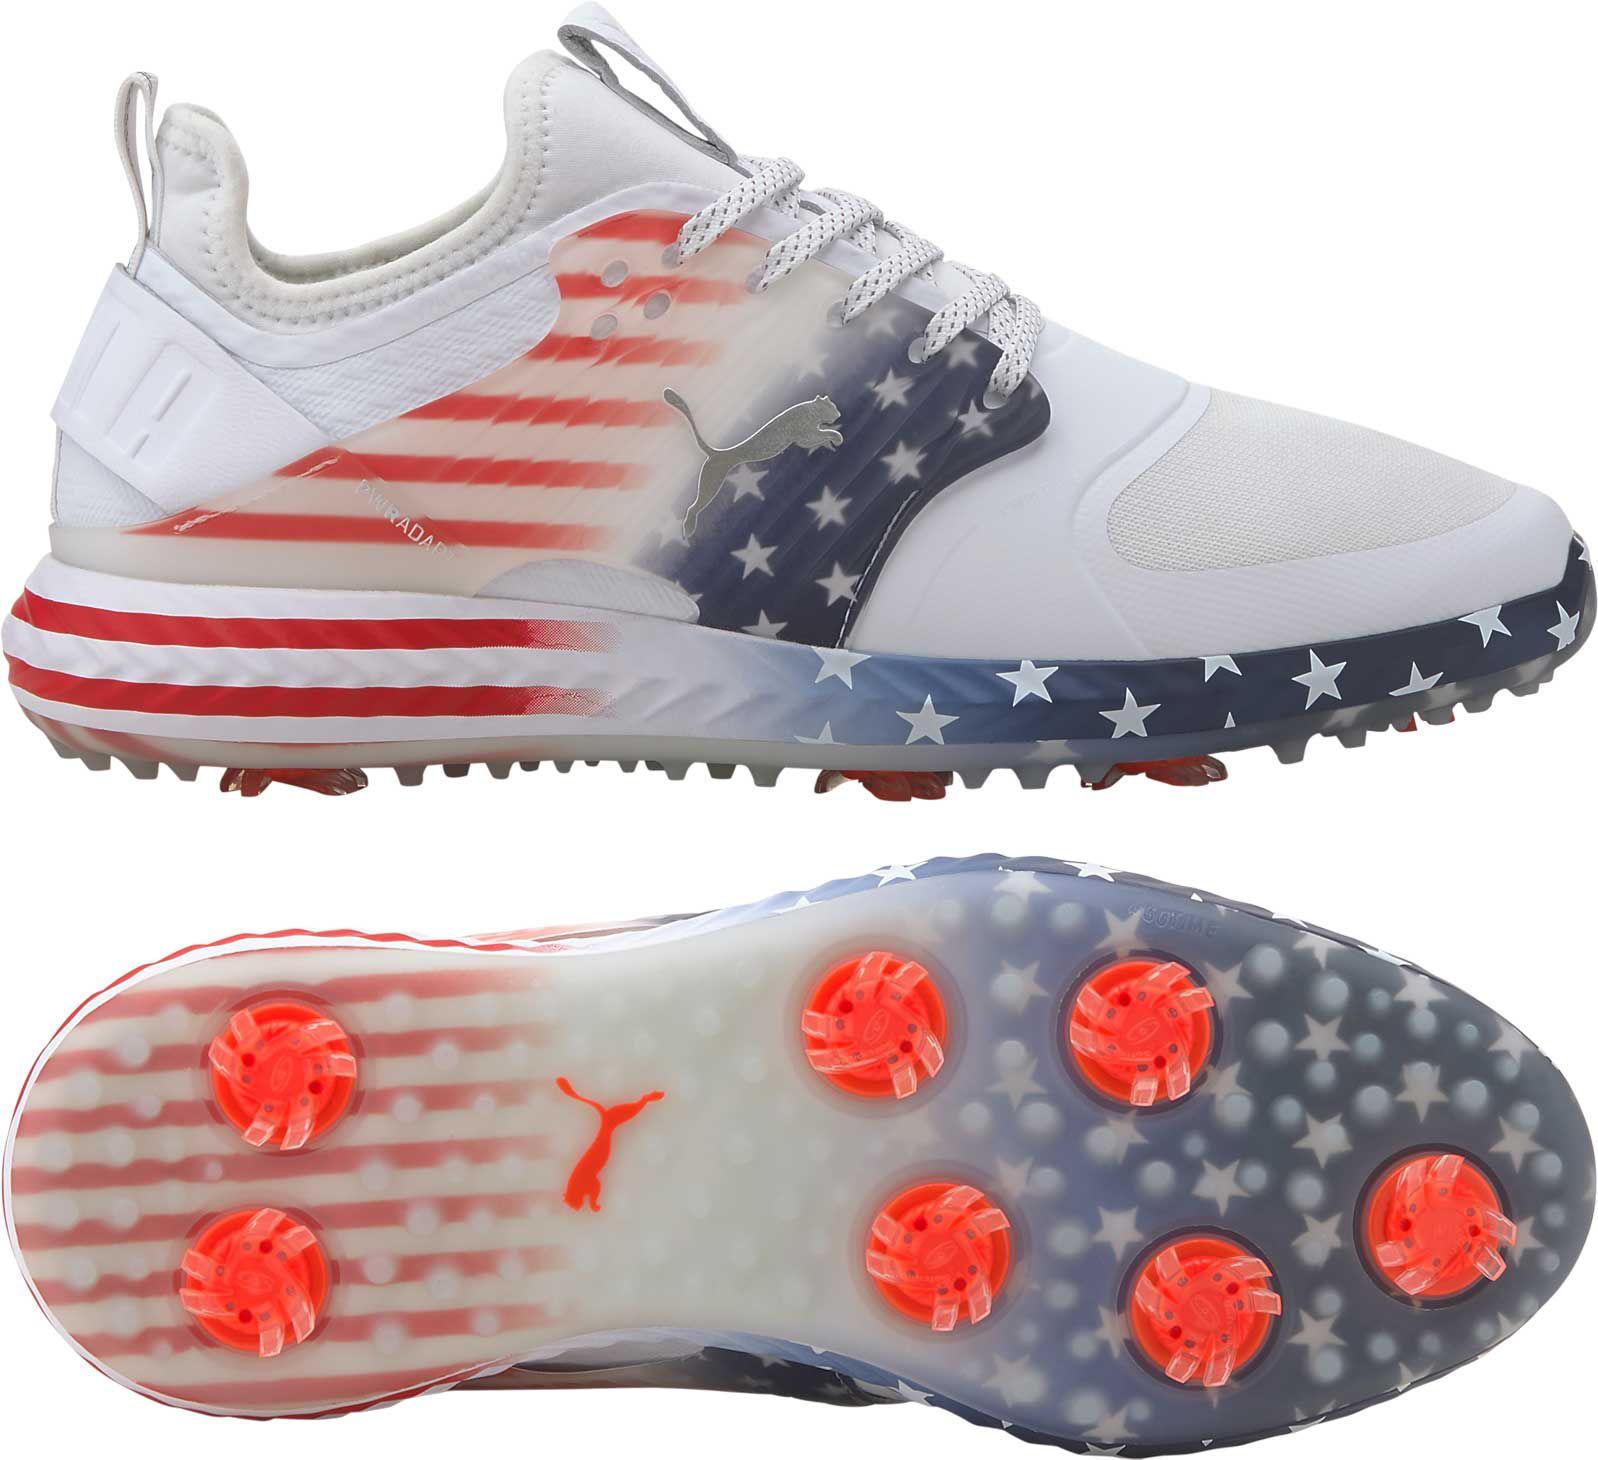 puma ignite pwradapt golf shoes